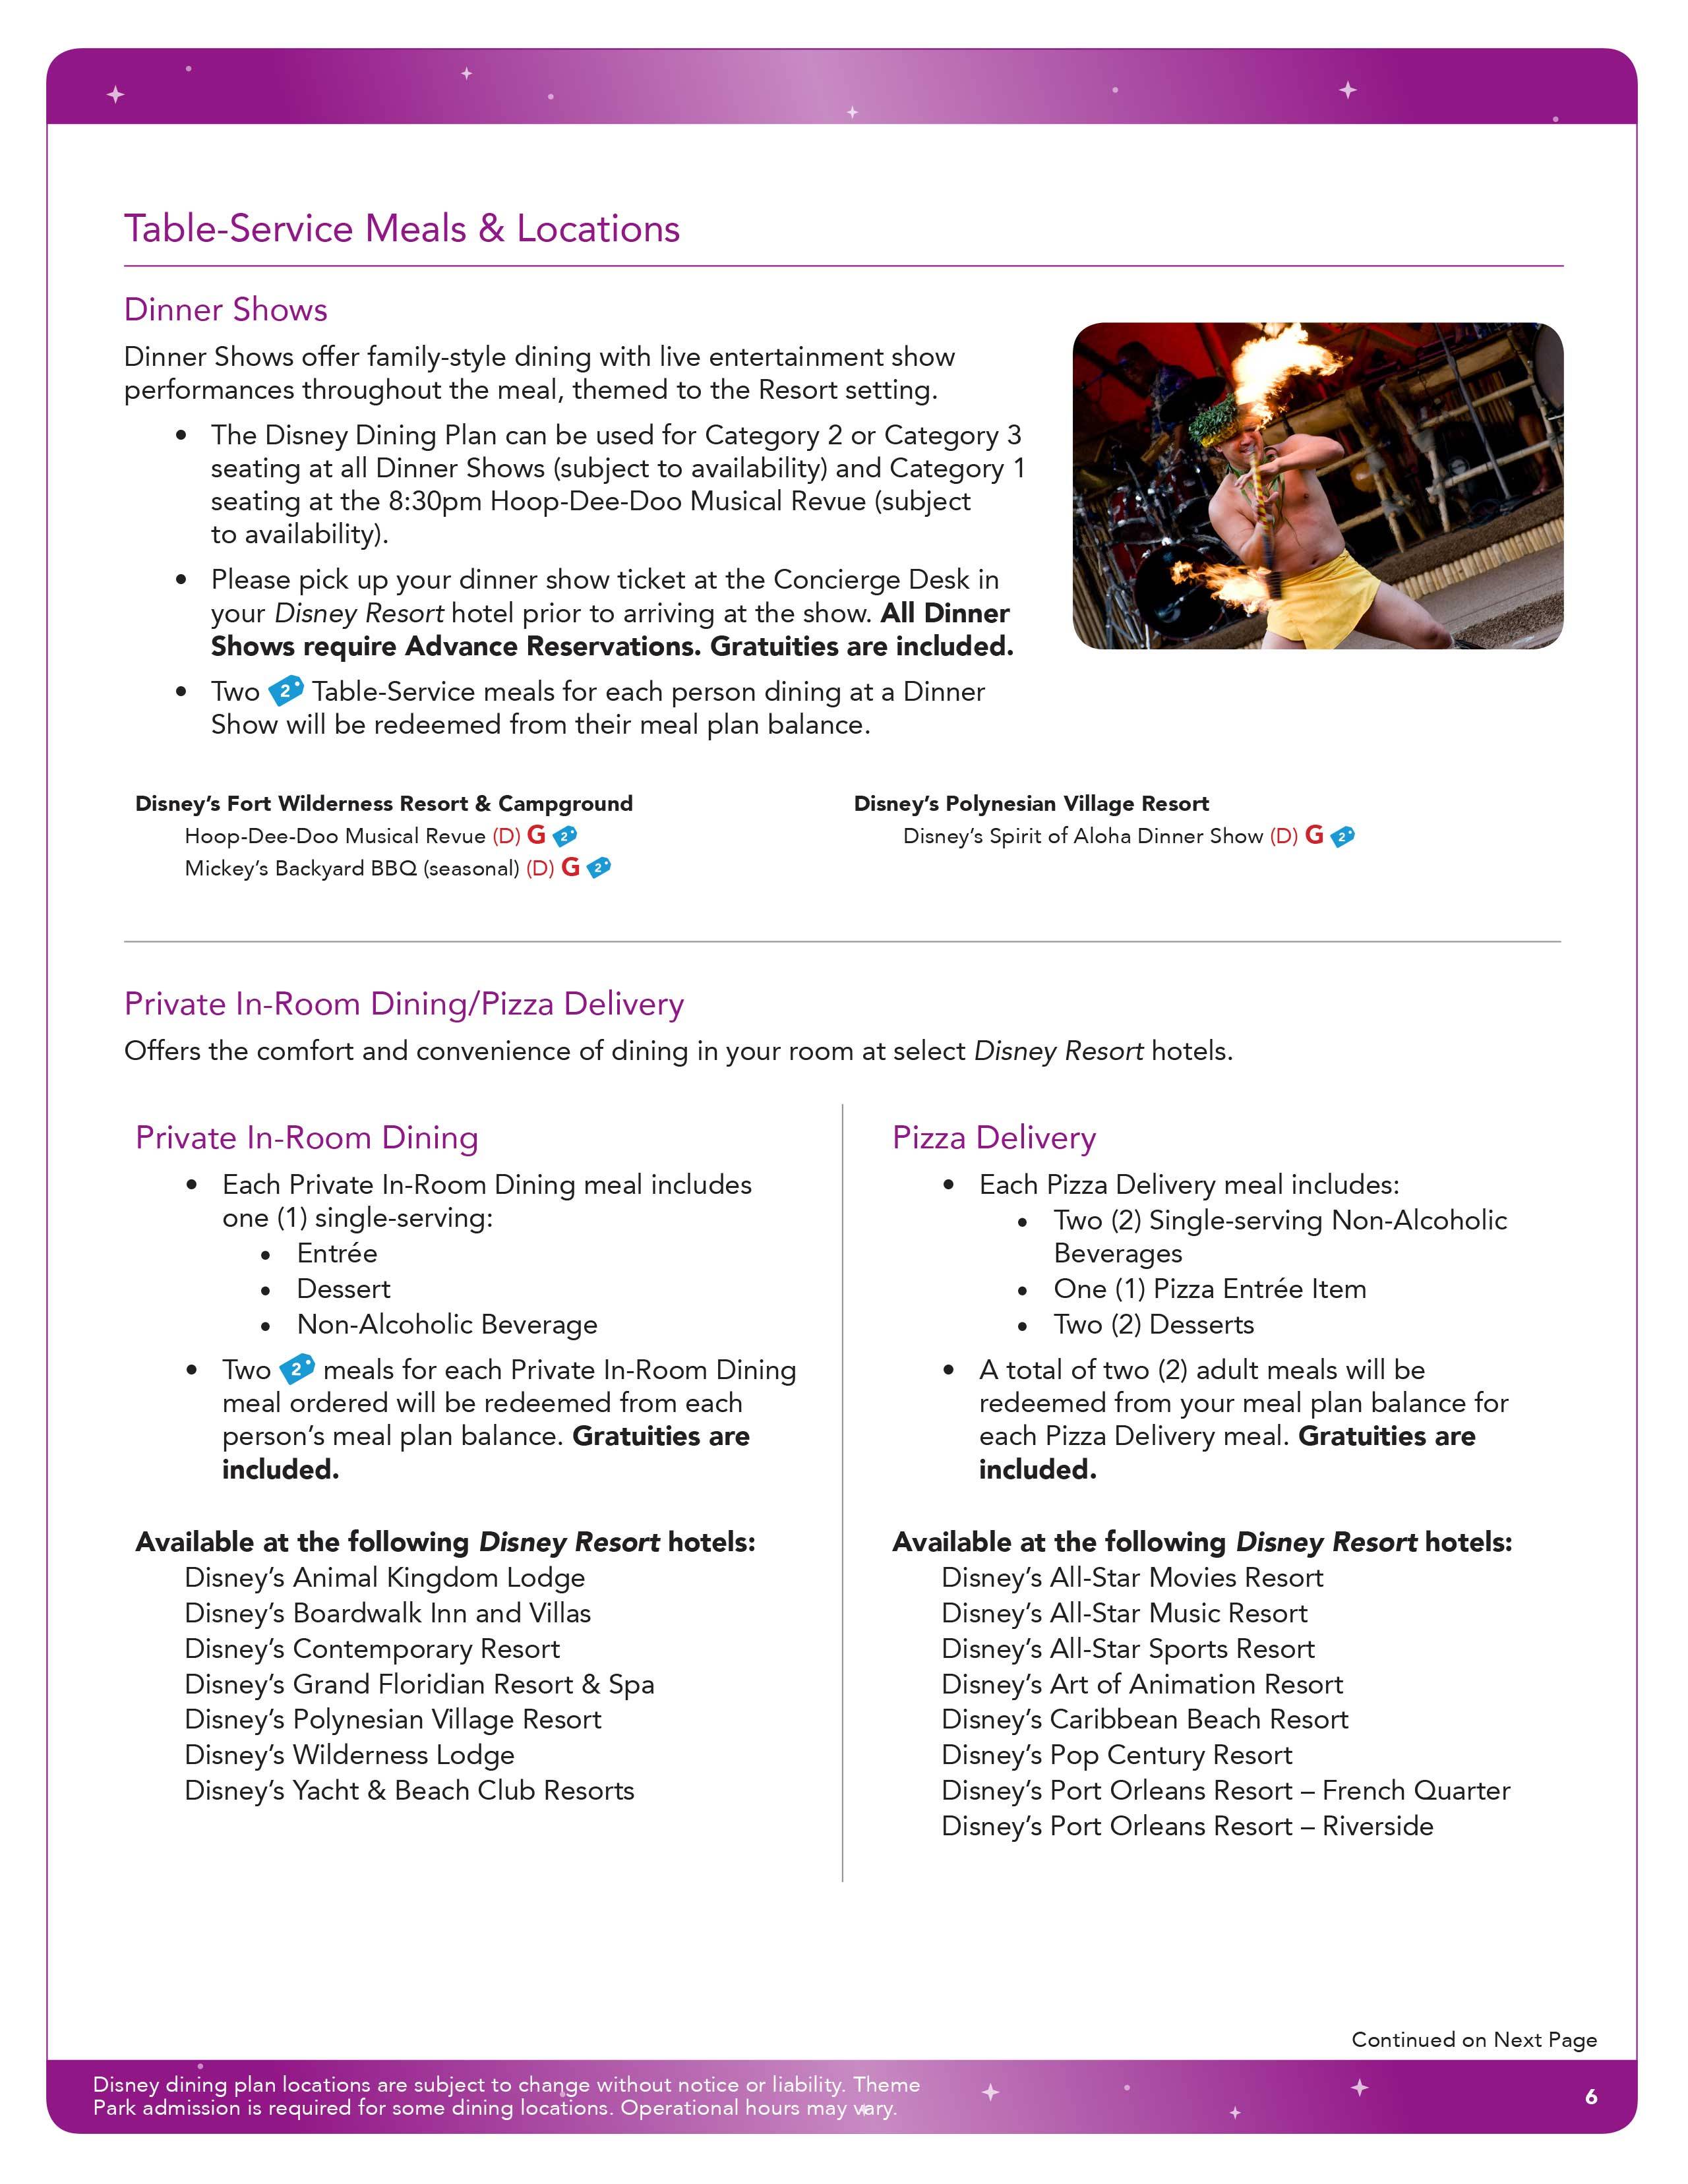 2016 Disney Dining Plan brochure - Page 6